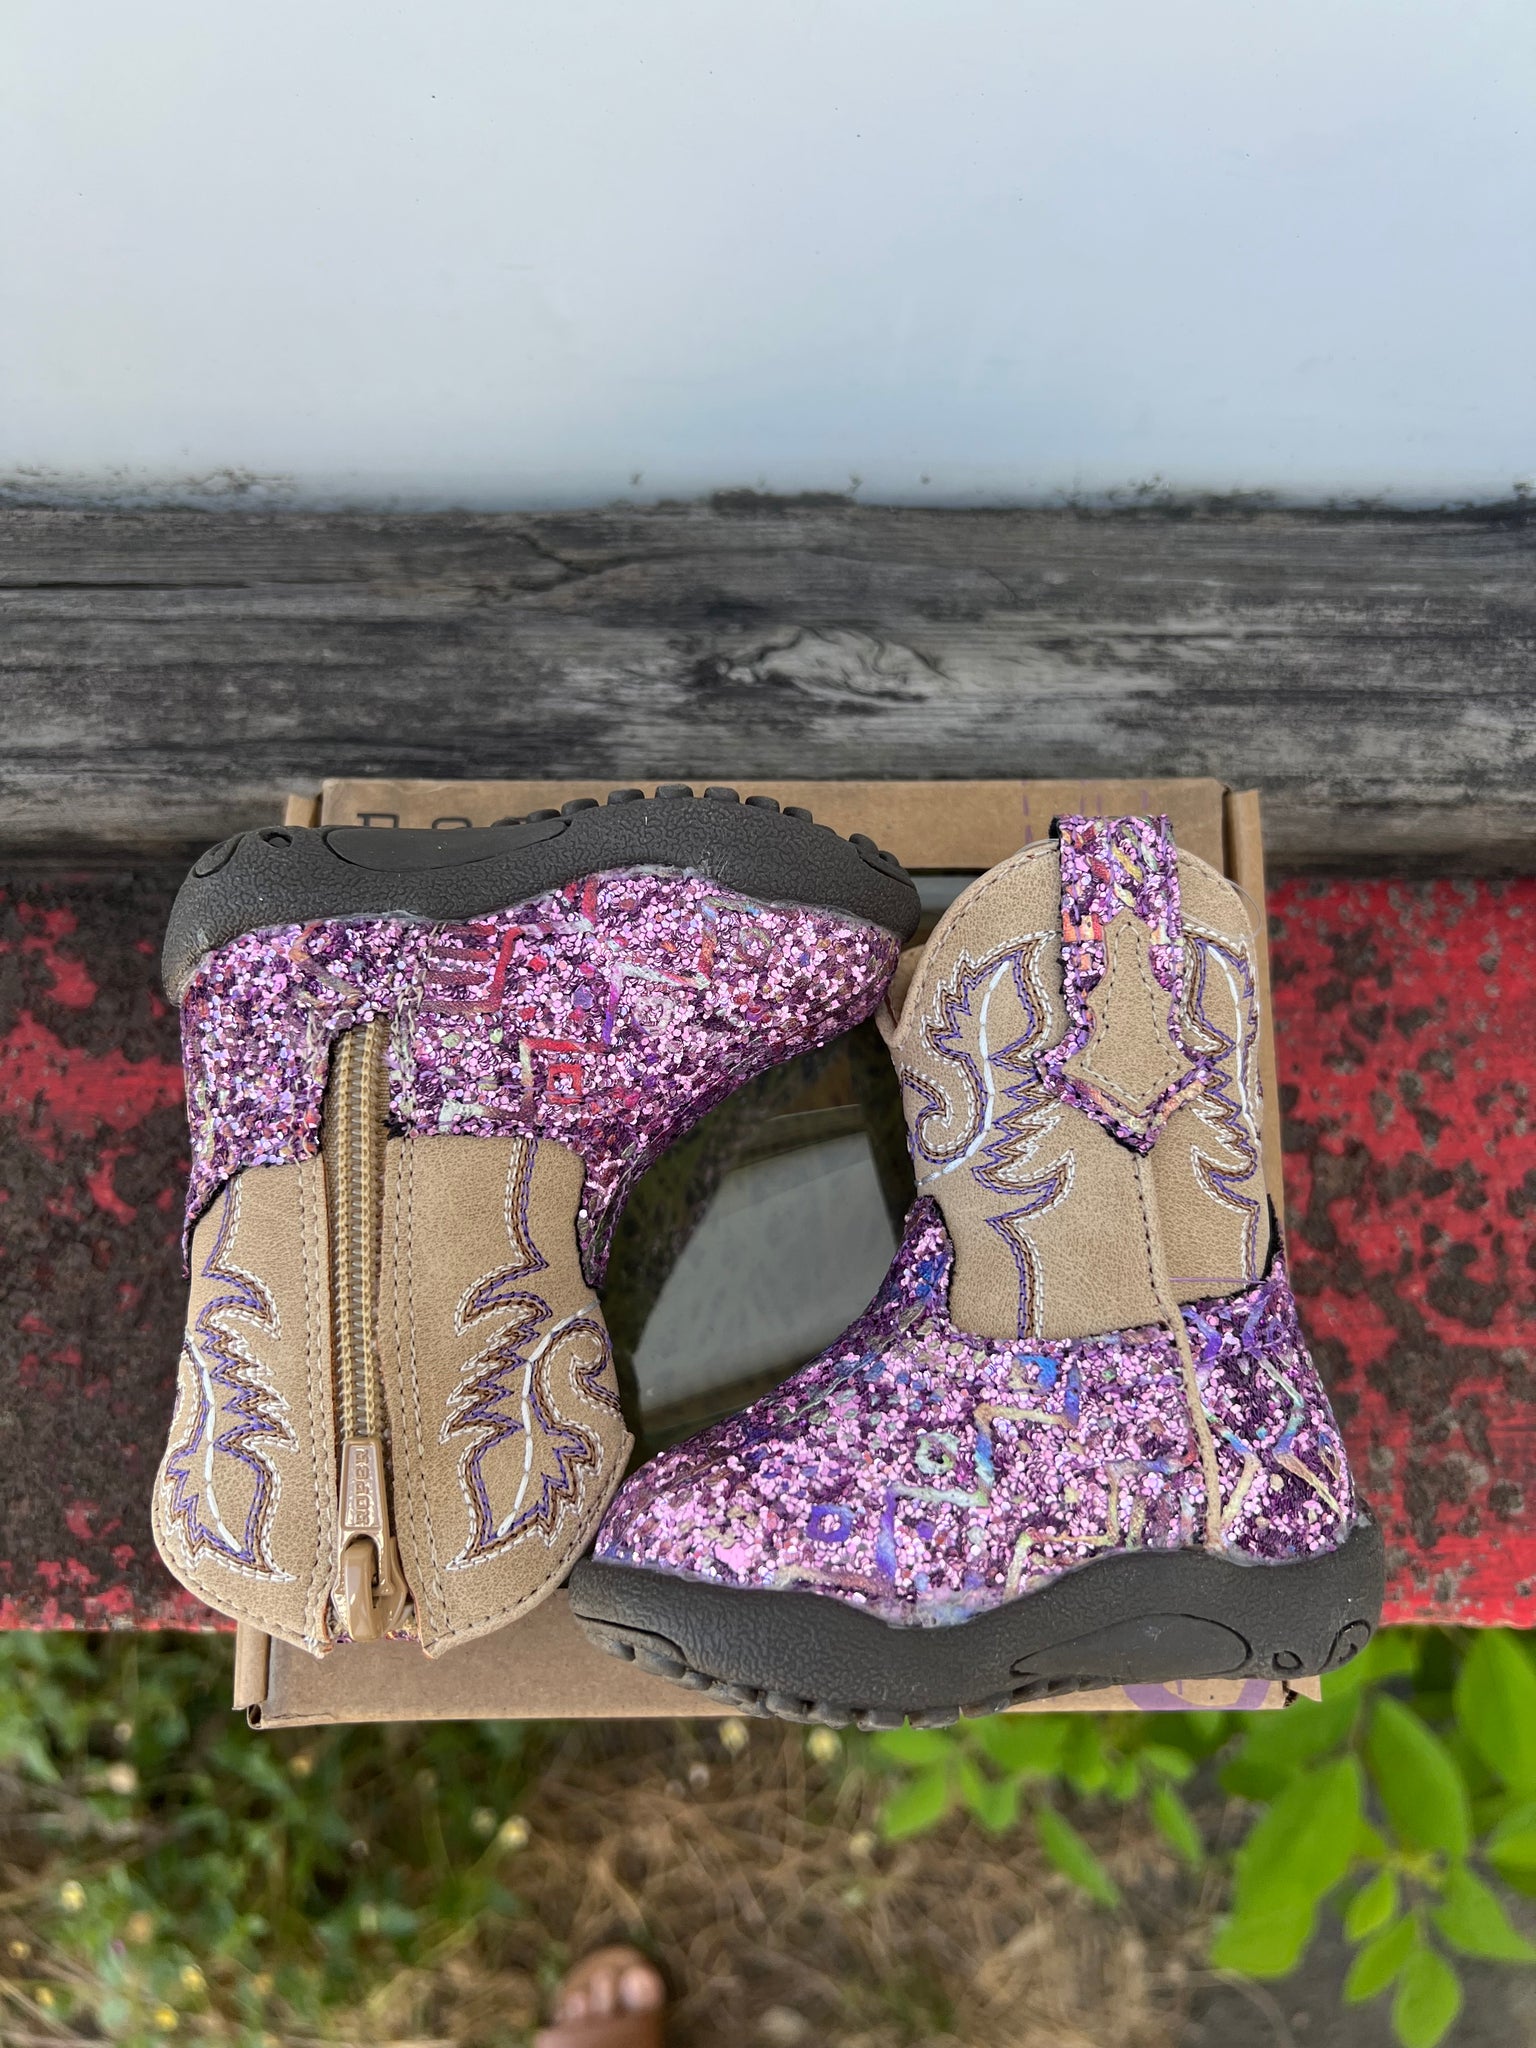 09-016-1225-3361 Roper Infant Cowbaby Southwest Glitter Boots Purple/Tan